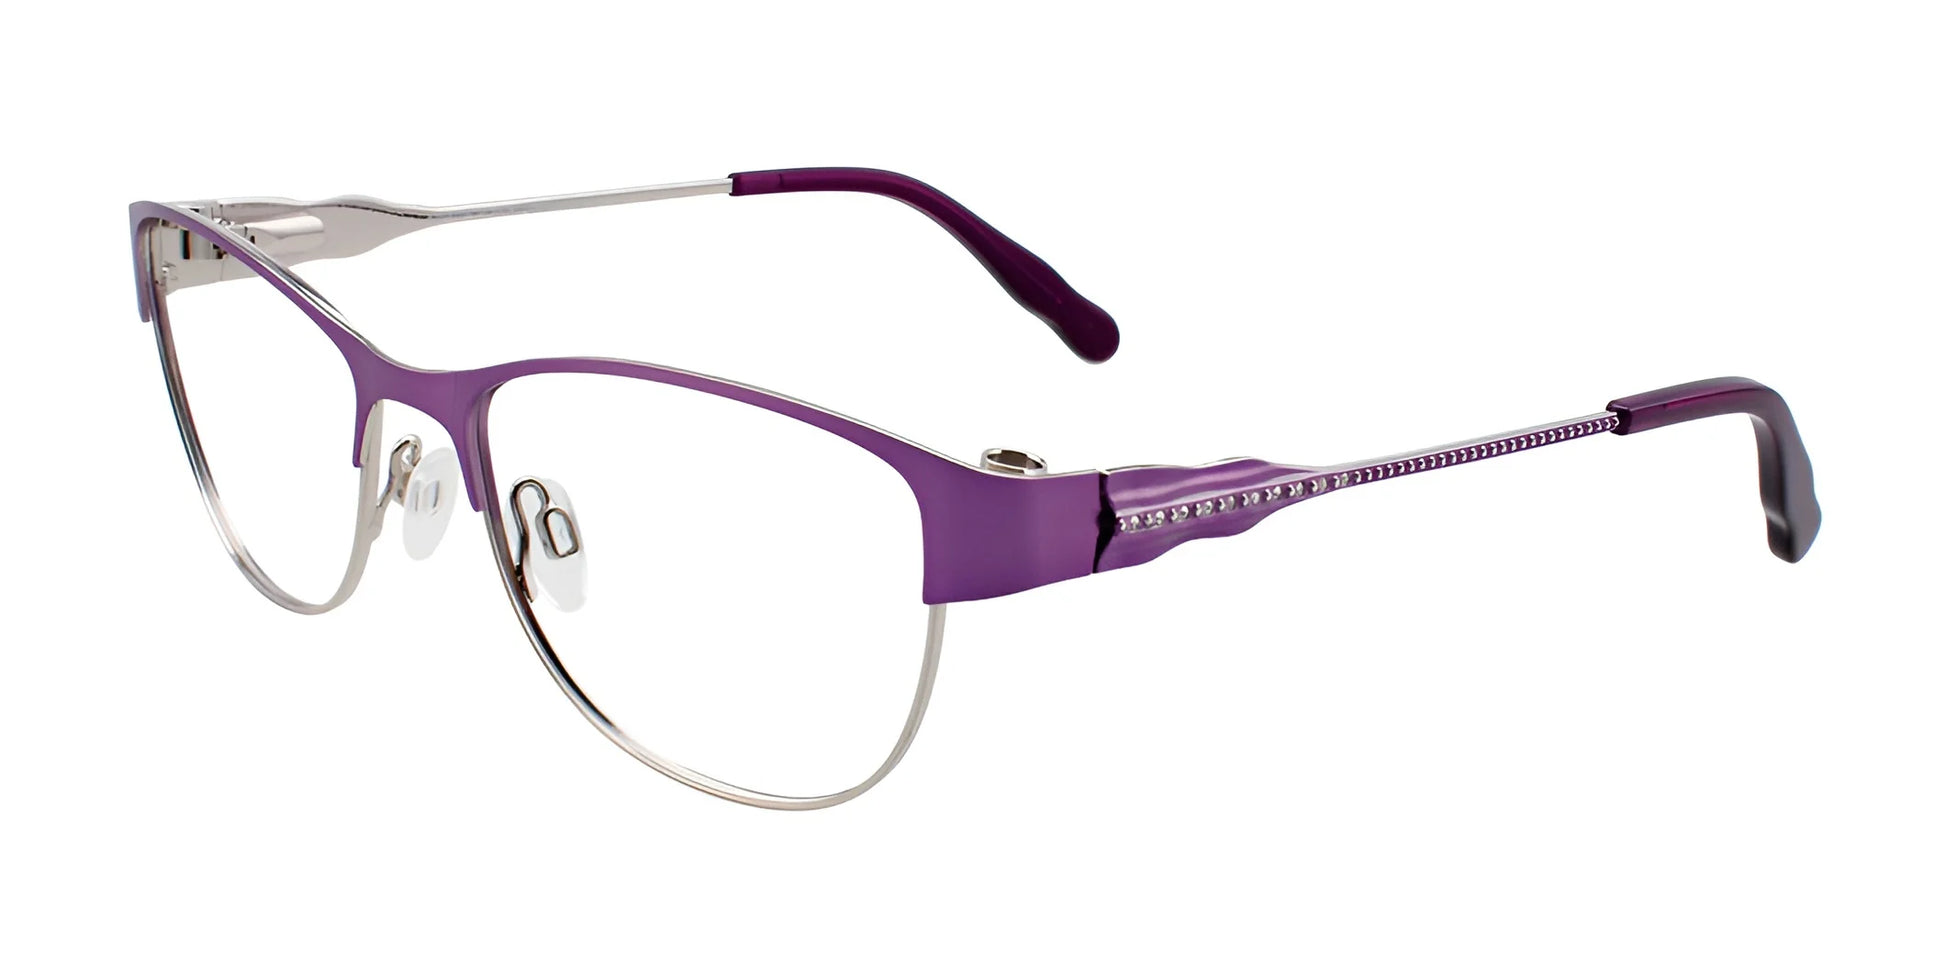 EasyClip EC405 Eyeglasses with Clip-on Sunglasses Satin Light Lavender & Shiny Silver